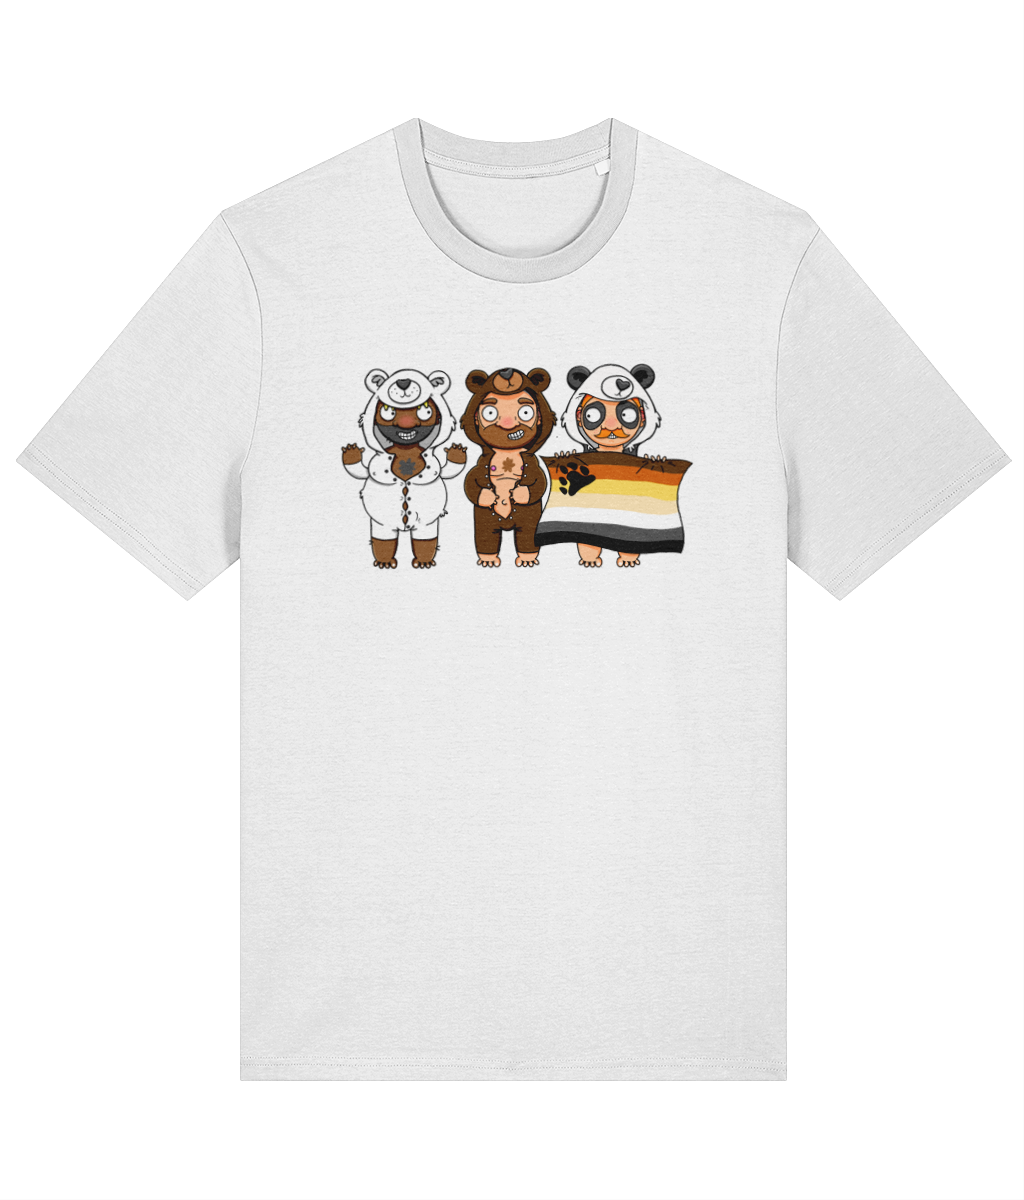 Three Bears in Onesies T-shirt